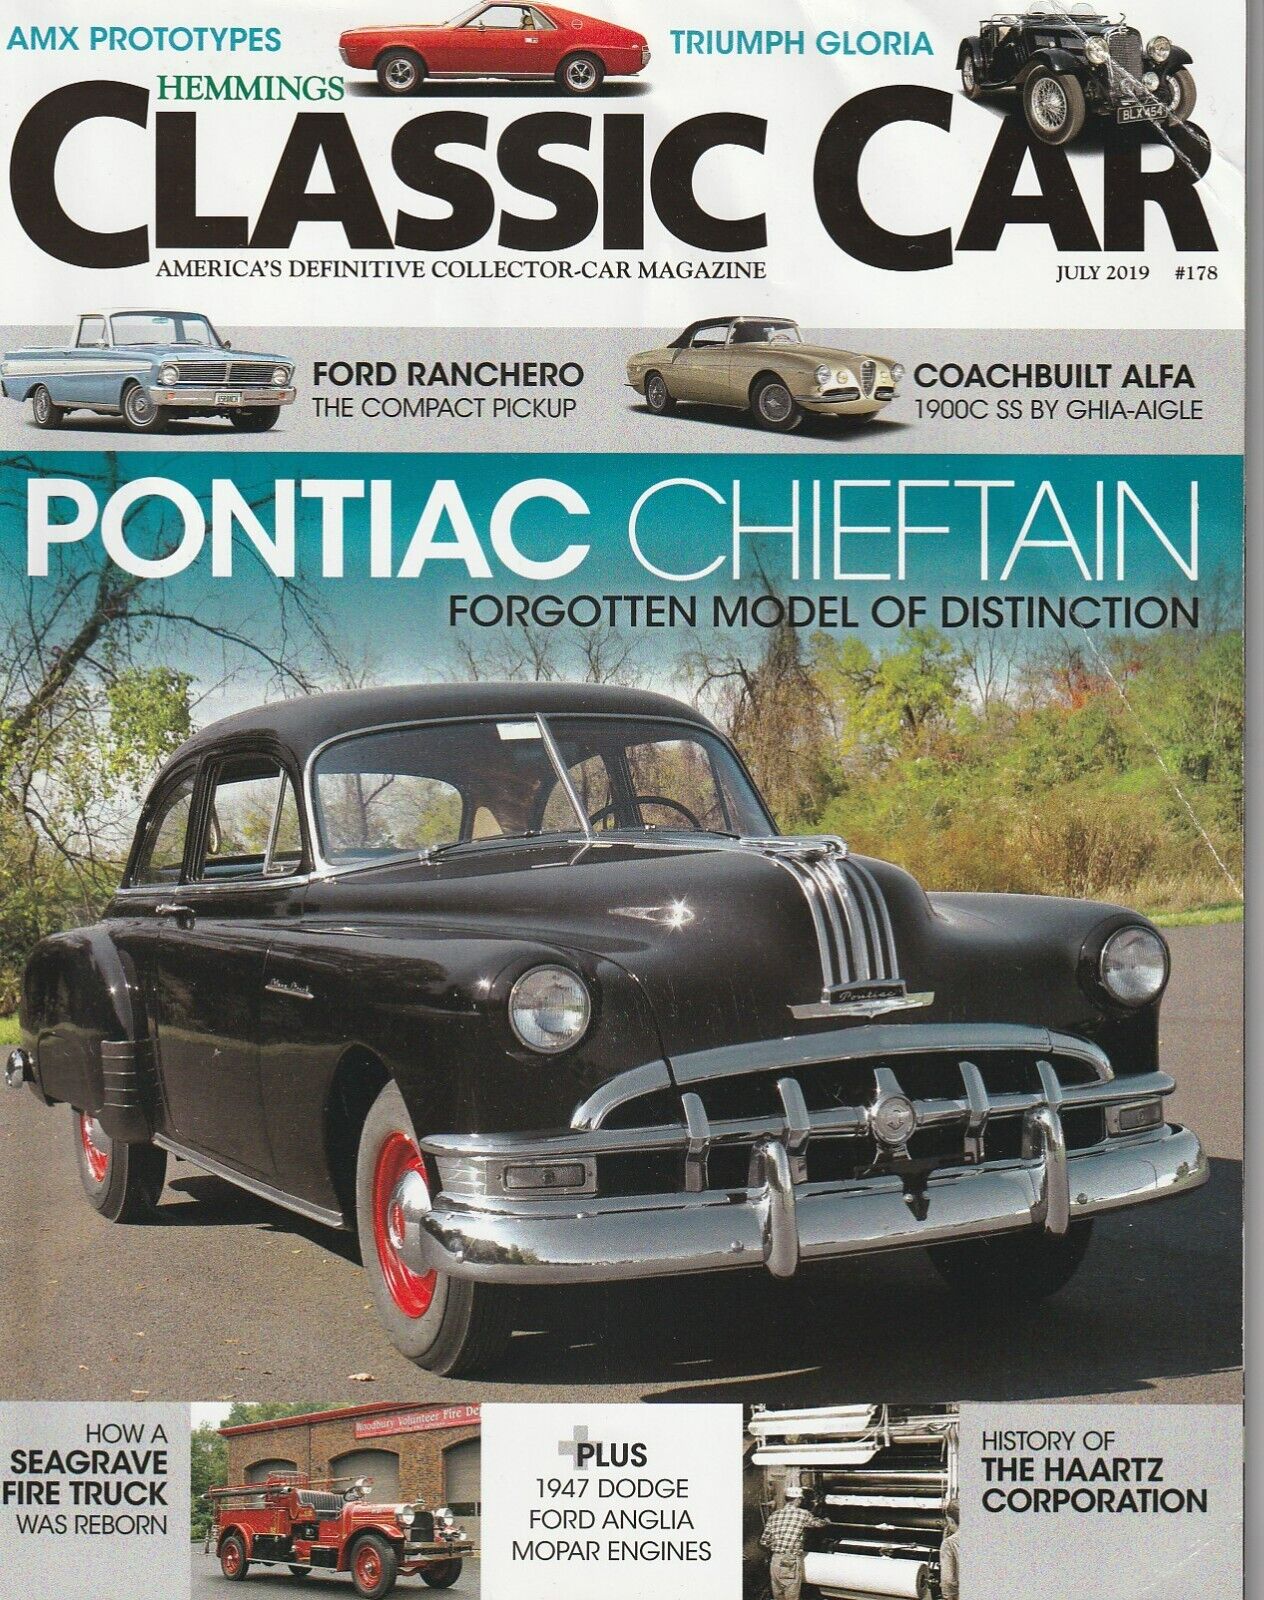 Hemmings Classic Car Magazine - July 2019 - Pontiac Chieftain